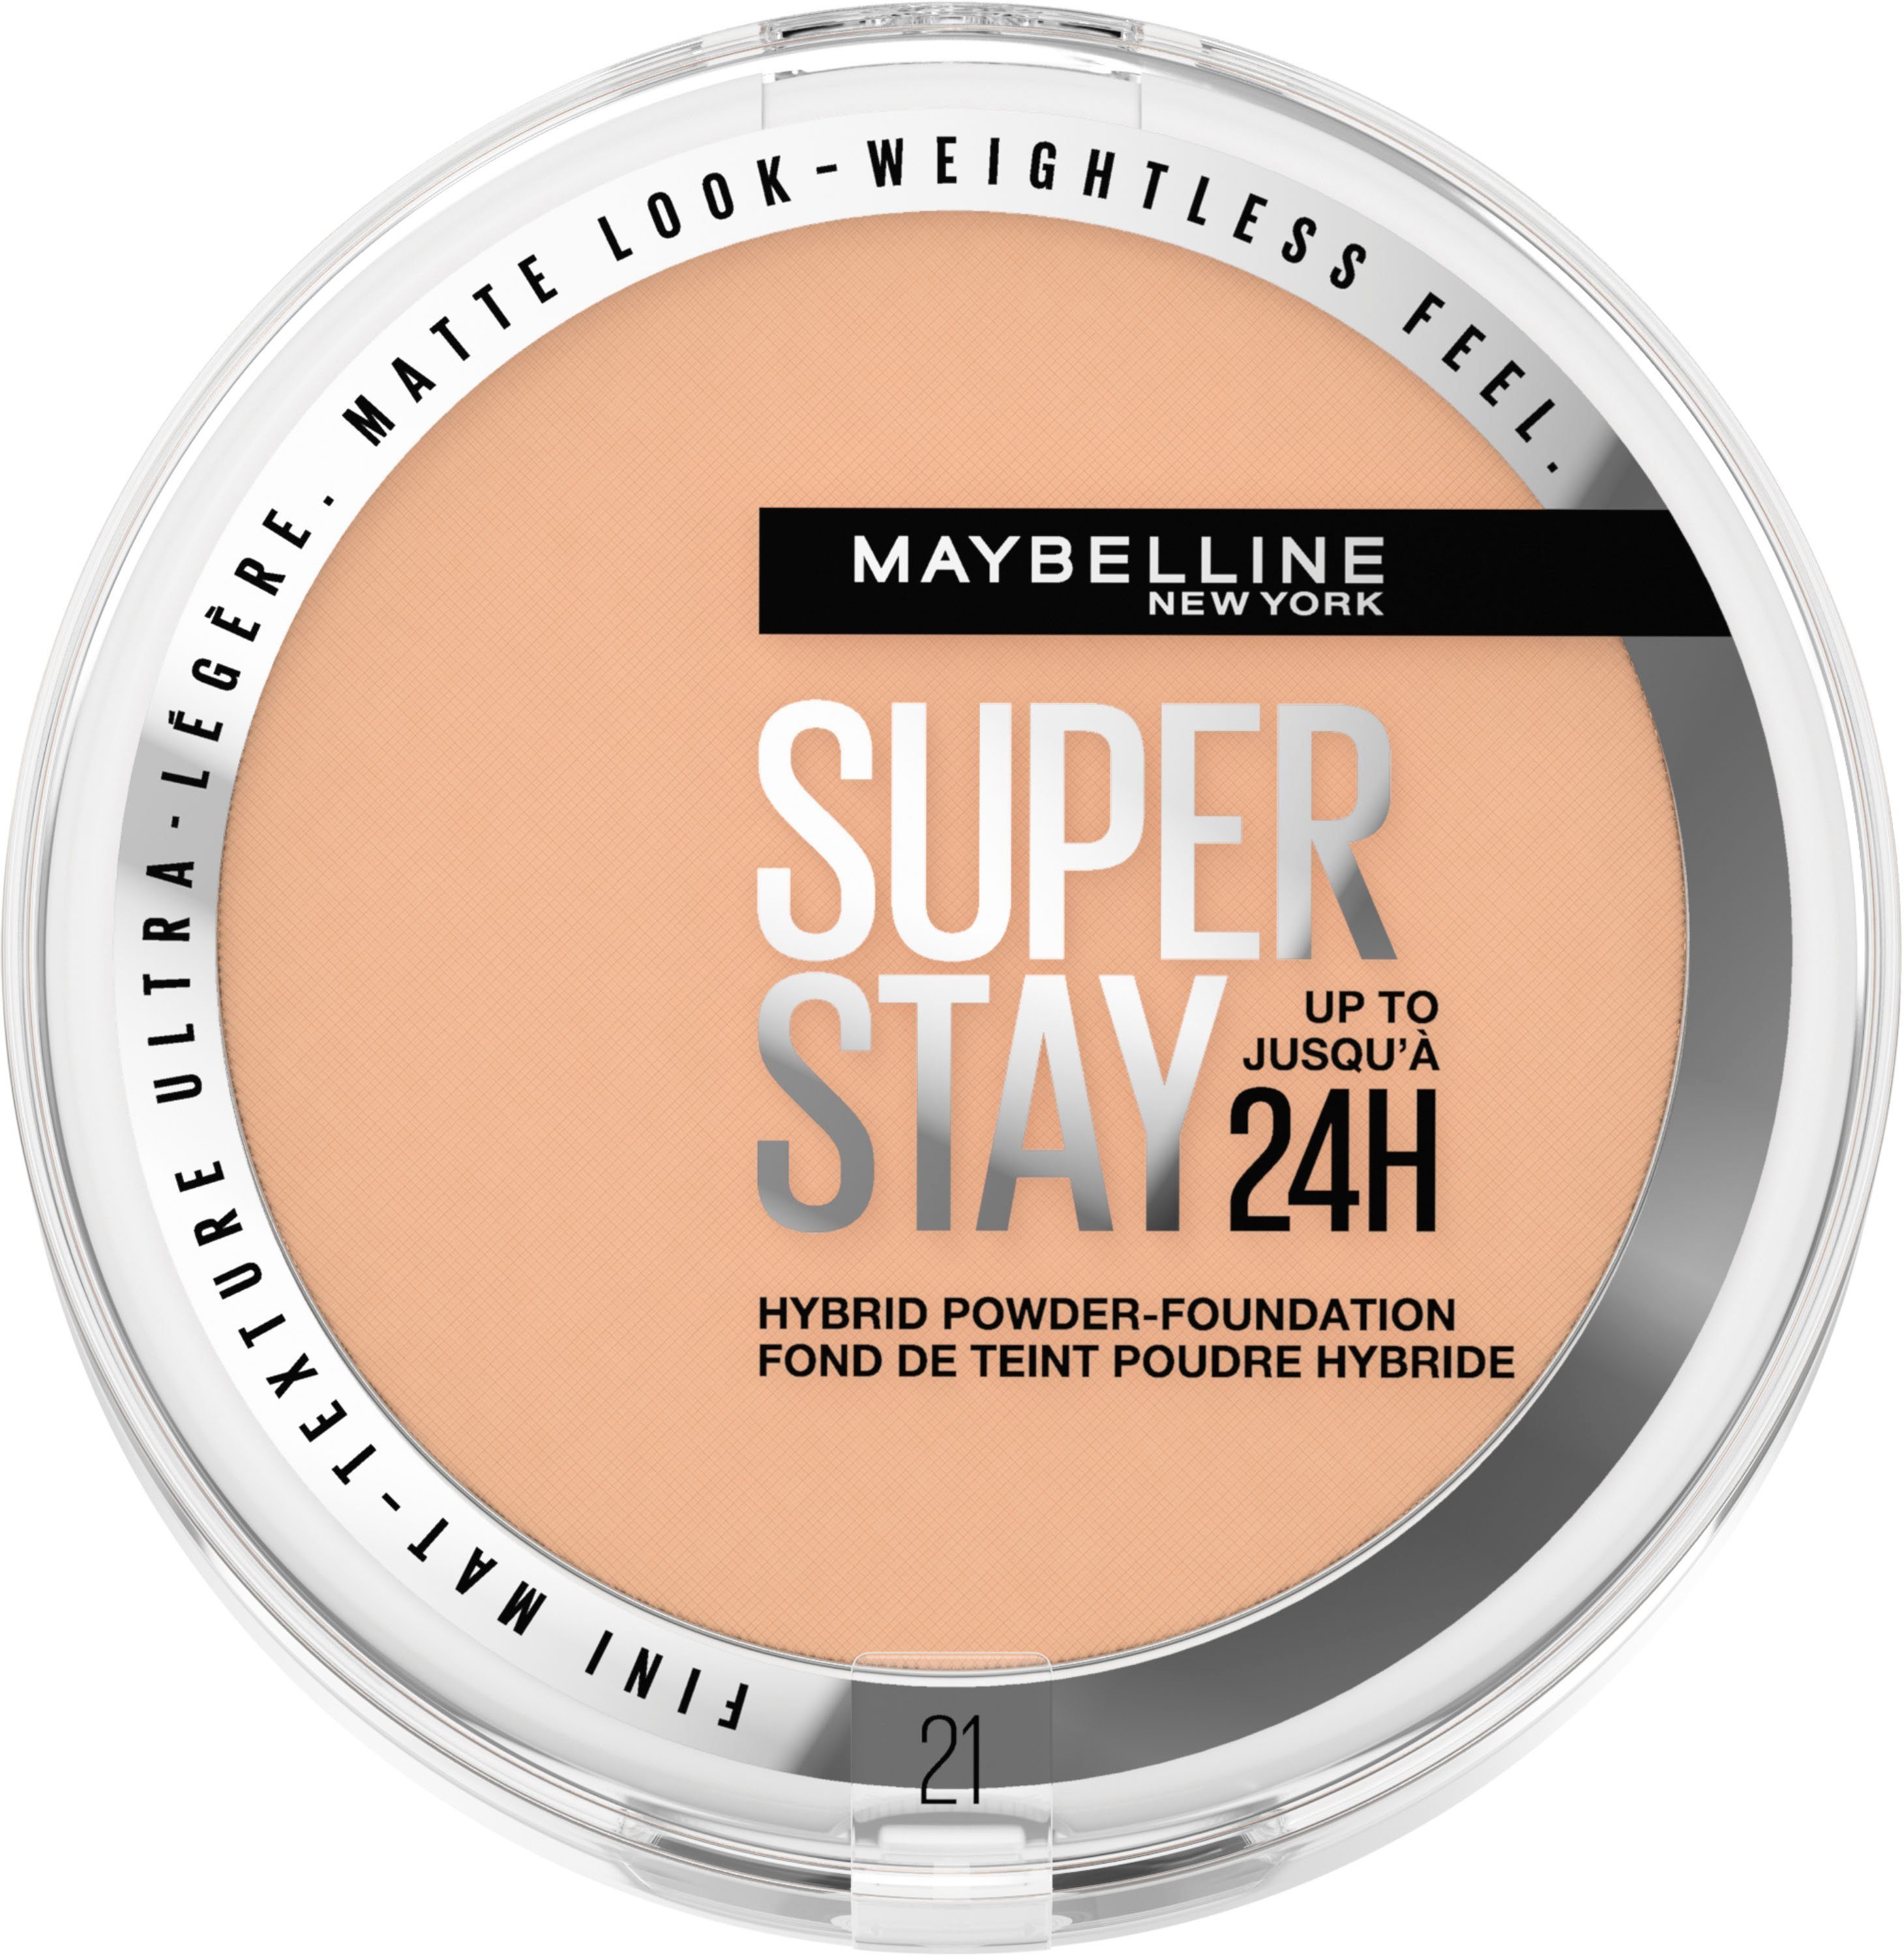 MAYBELLINE NEW York New Hybrides Foundation Maybelline YORK Make-Up Stay Super Puder